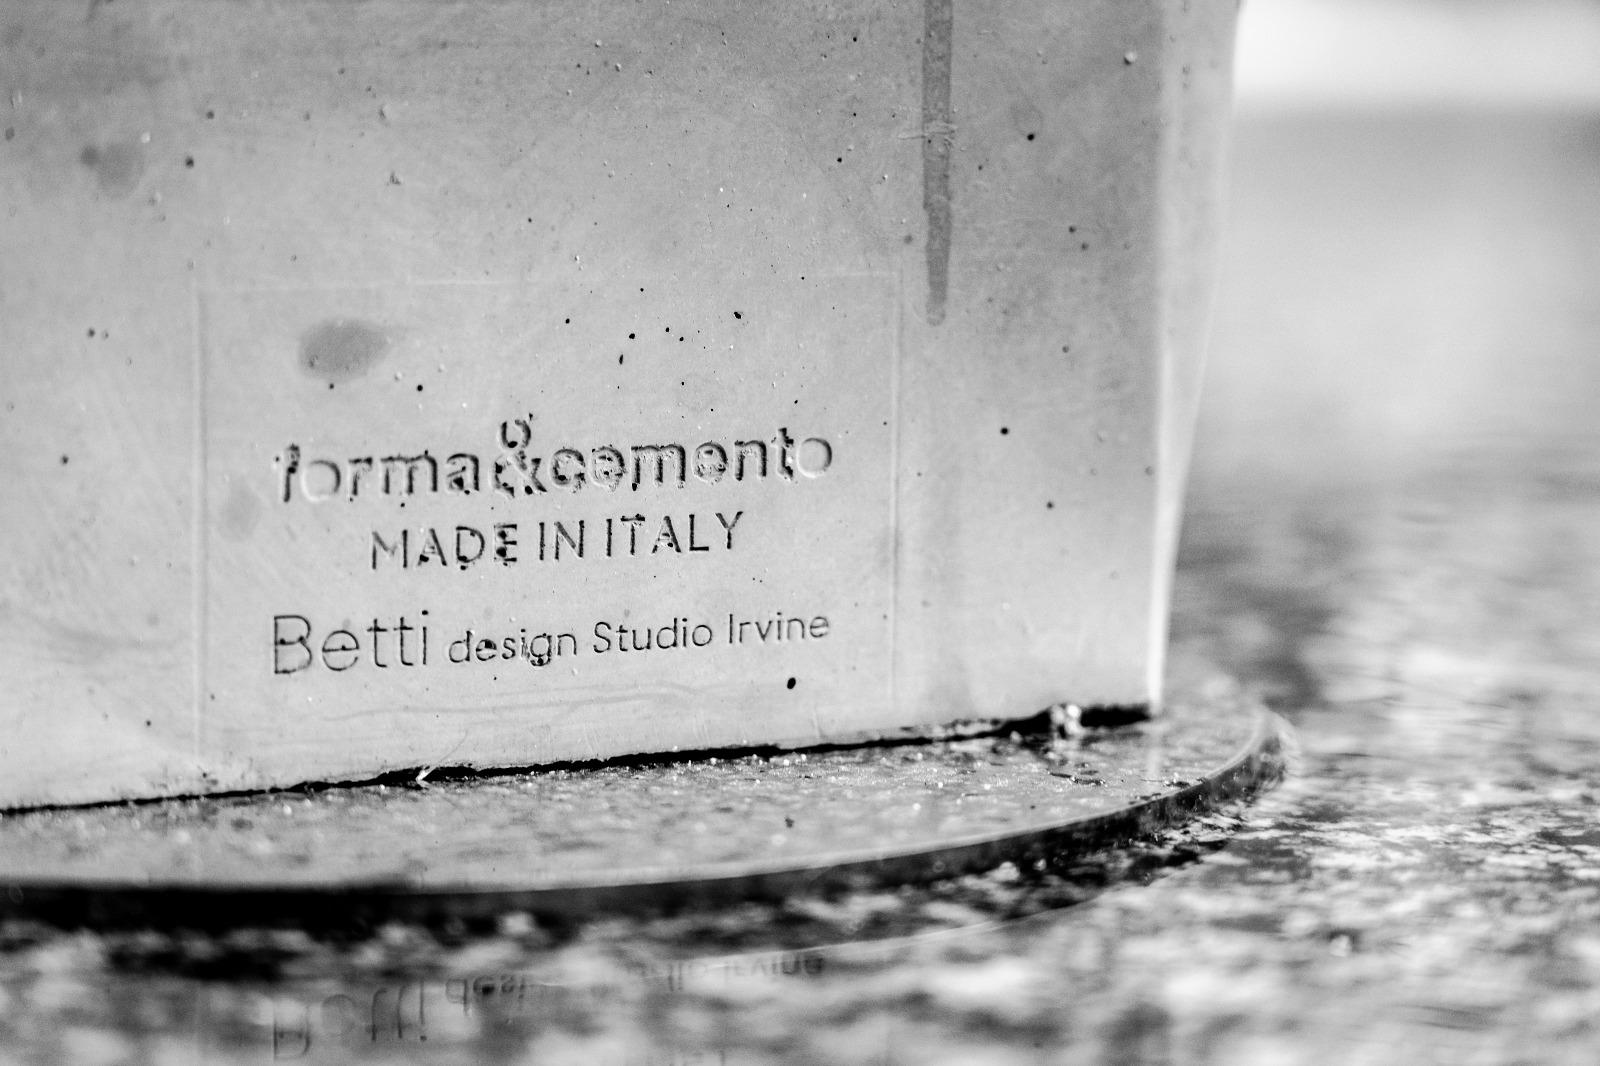 Metal 21st Century Studio Irvine Betti Concrete Stool in Silver Grey Cement Handmade For Sale